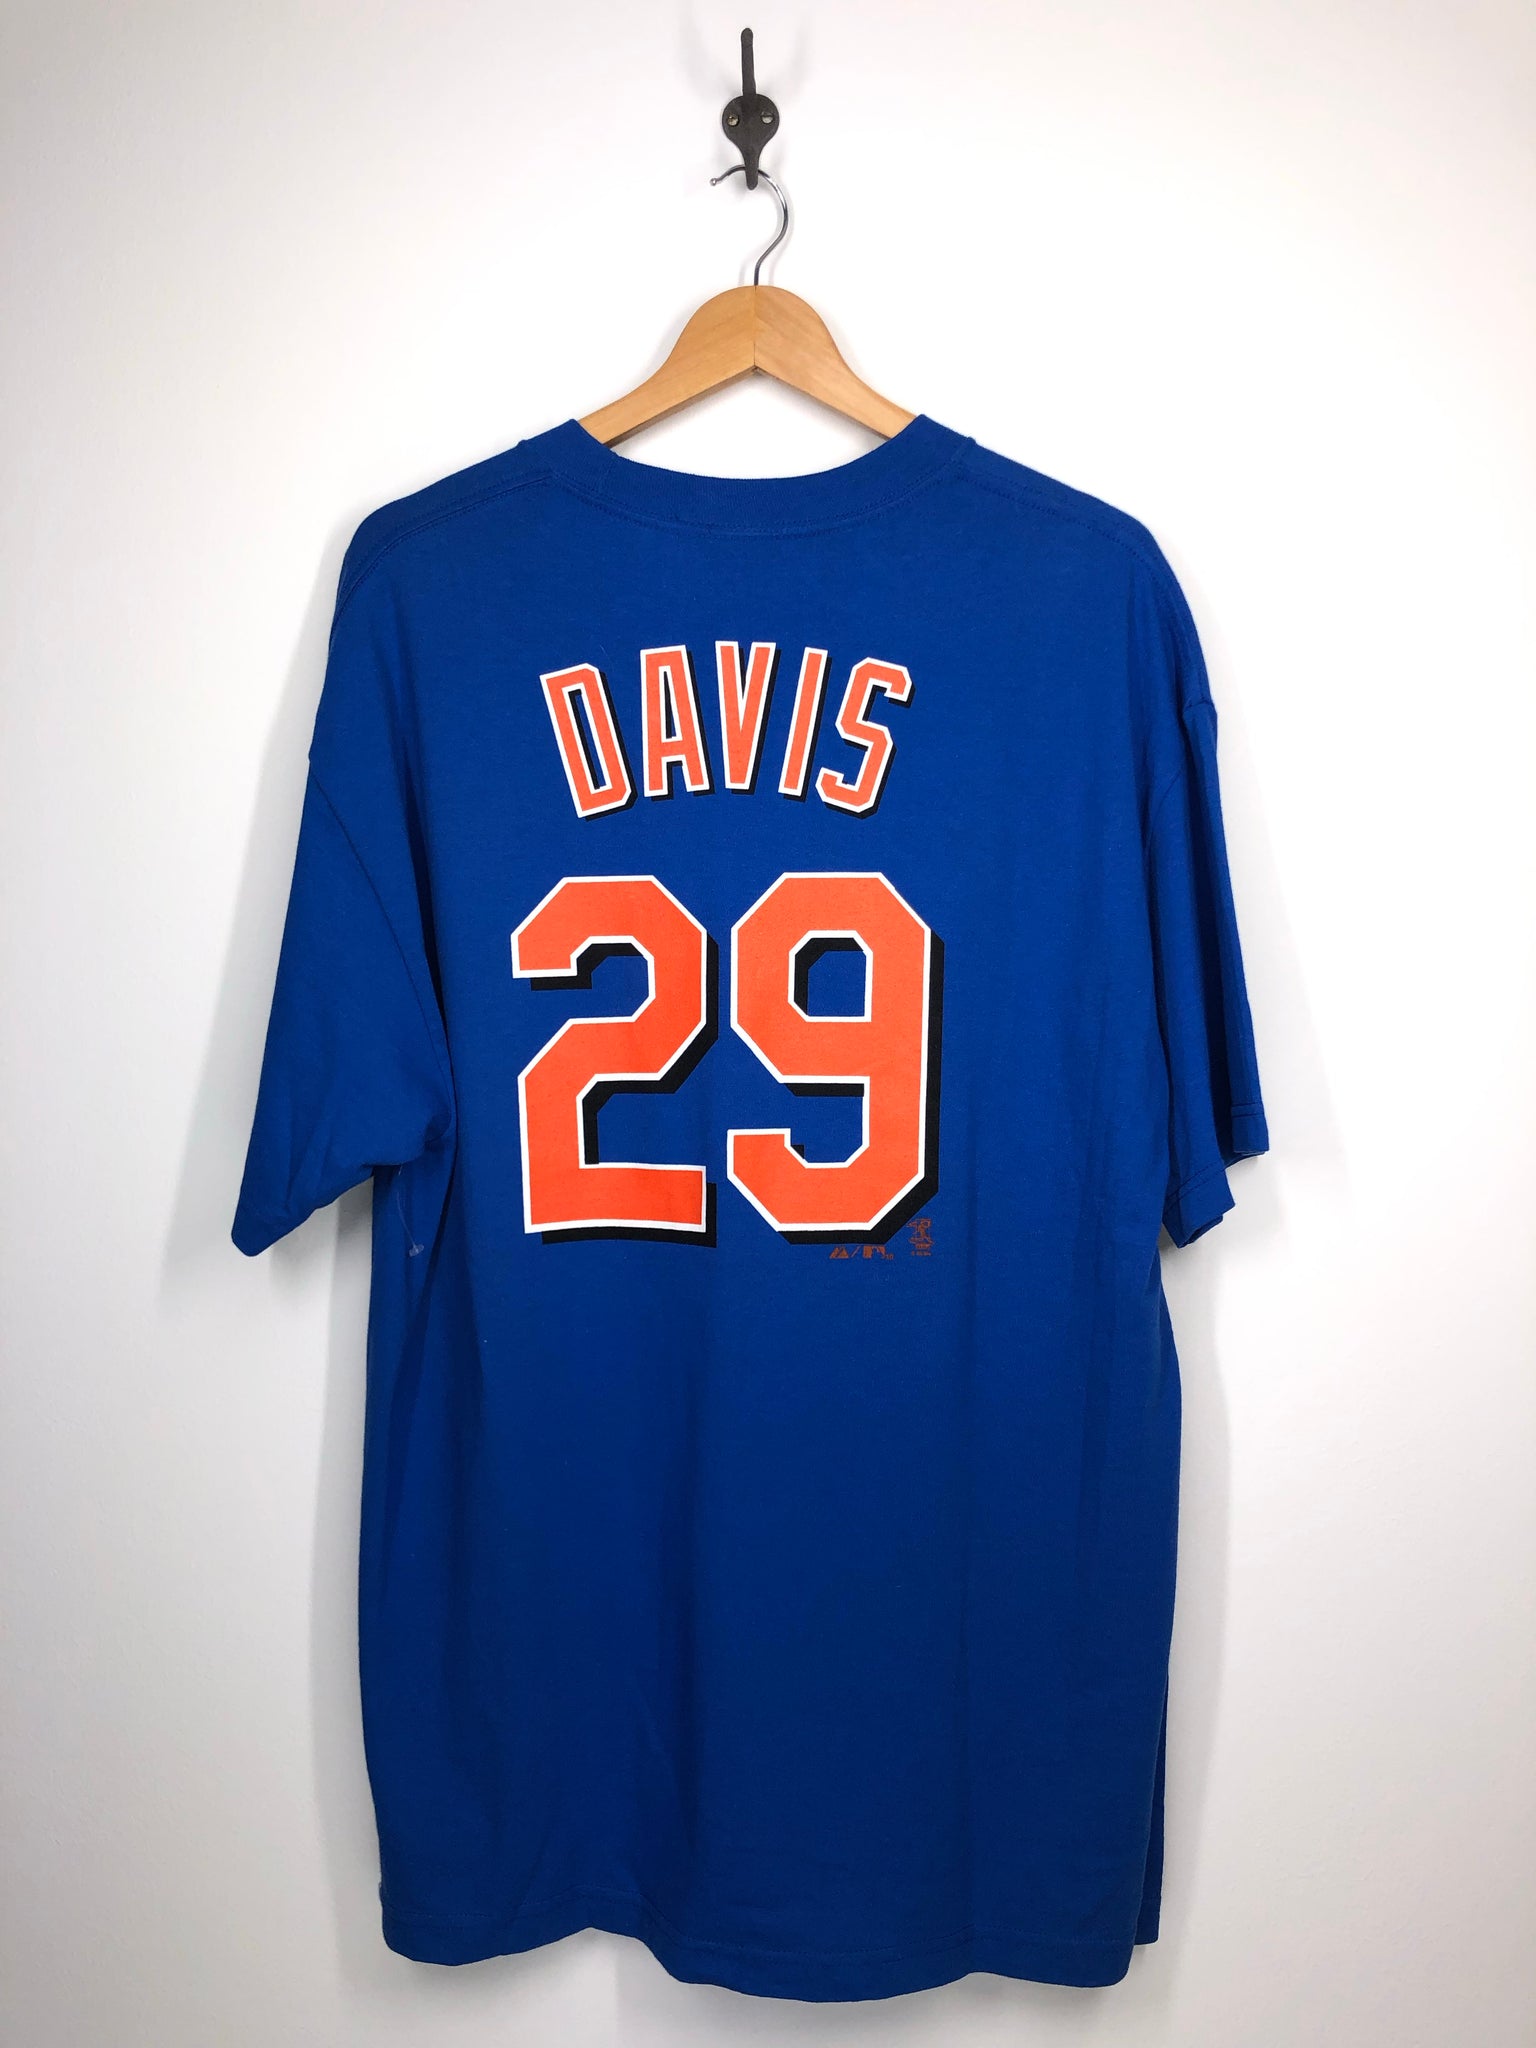 MLB - New York Mets - Ike Davis 29 - Majestic Shirt - XL Nwt